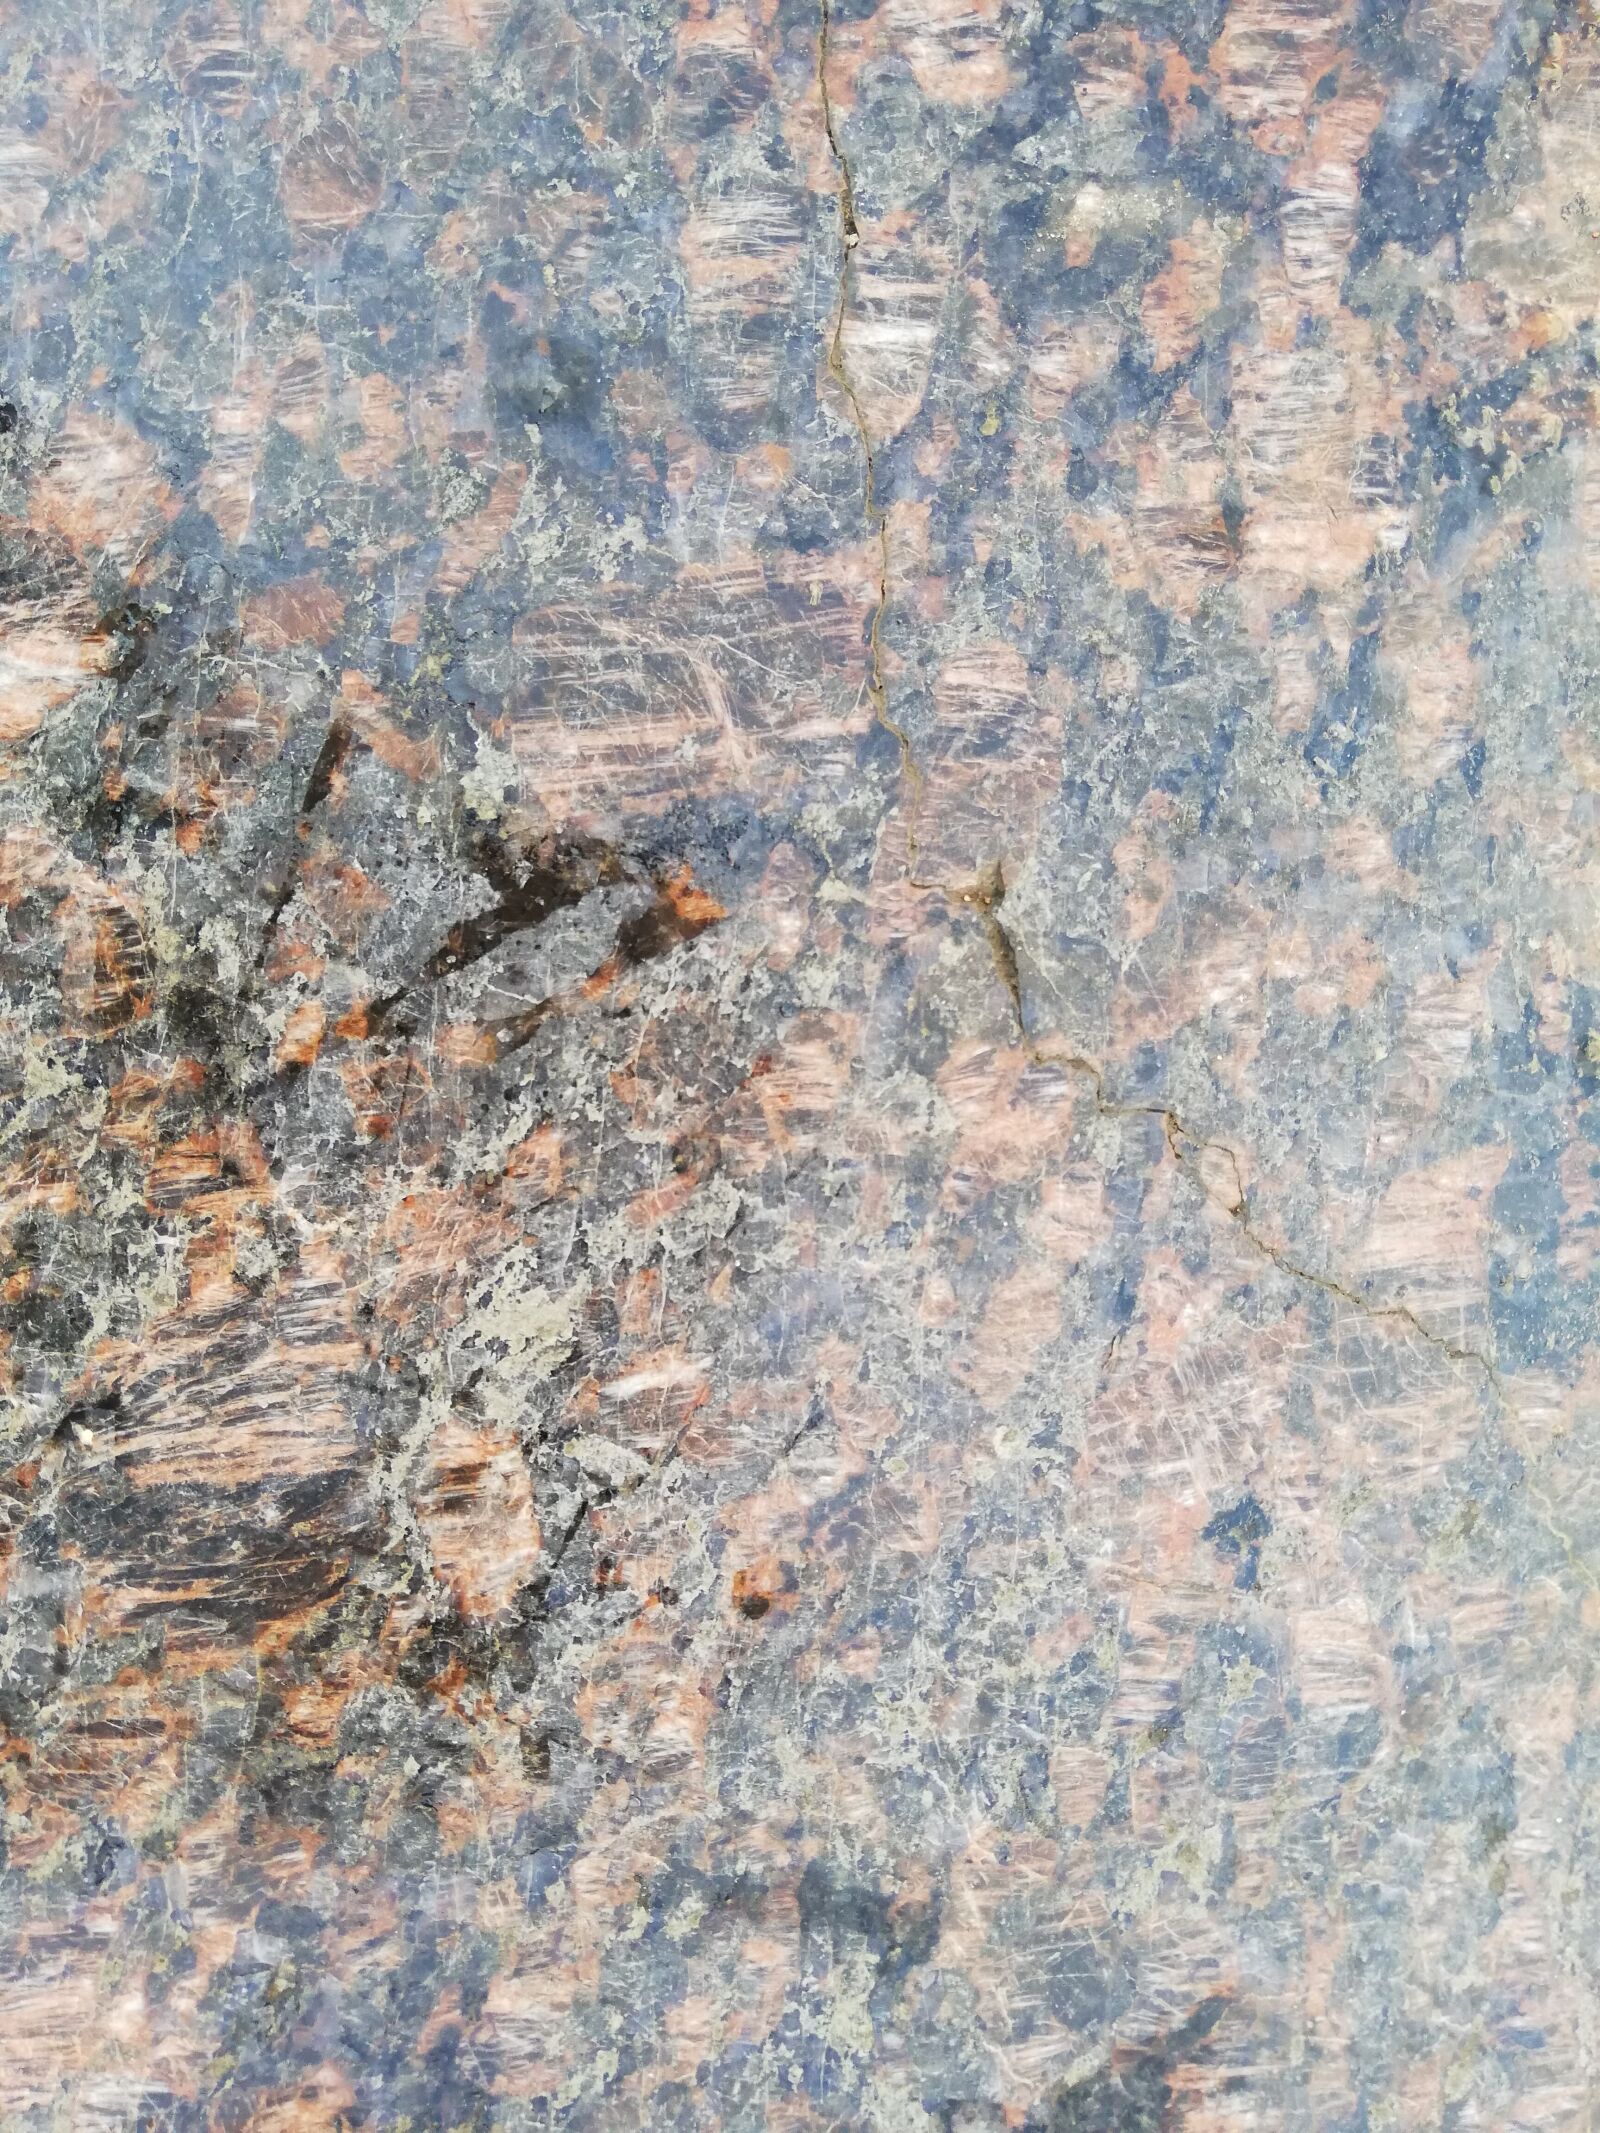 HUAWEI ANE-LX1 sample photo. Fountain, water, stone photography